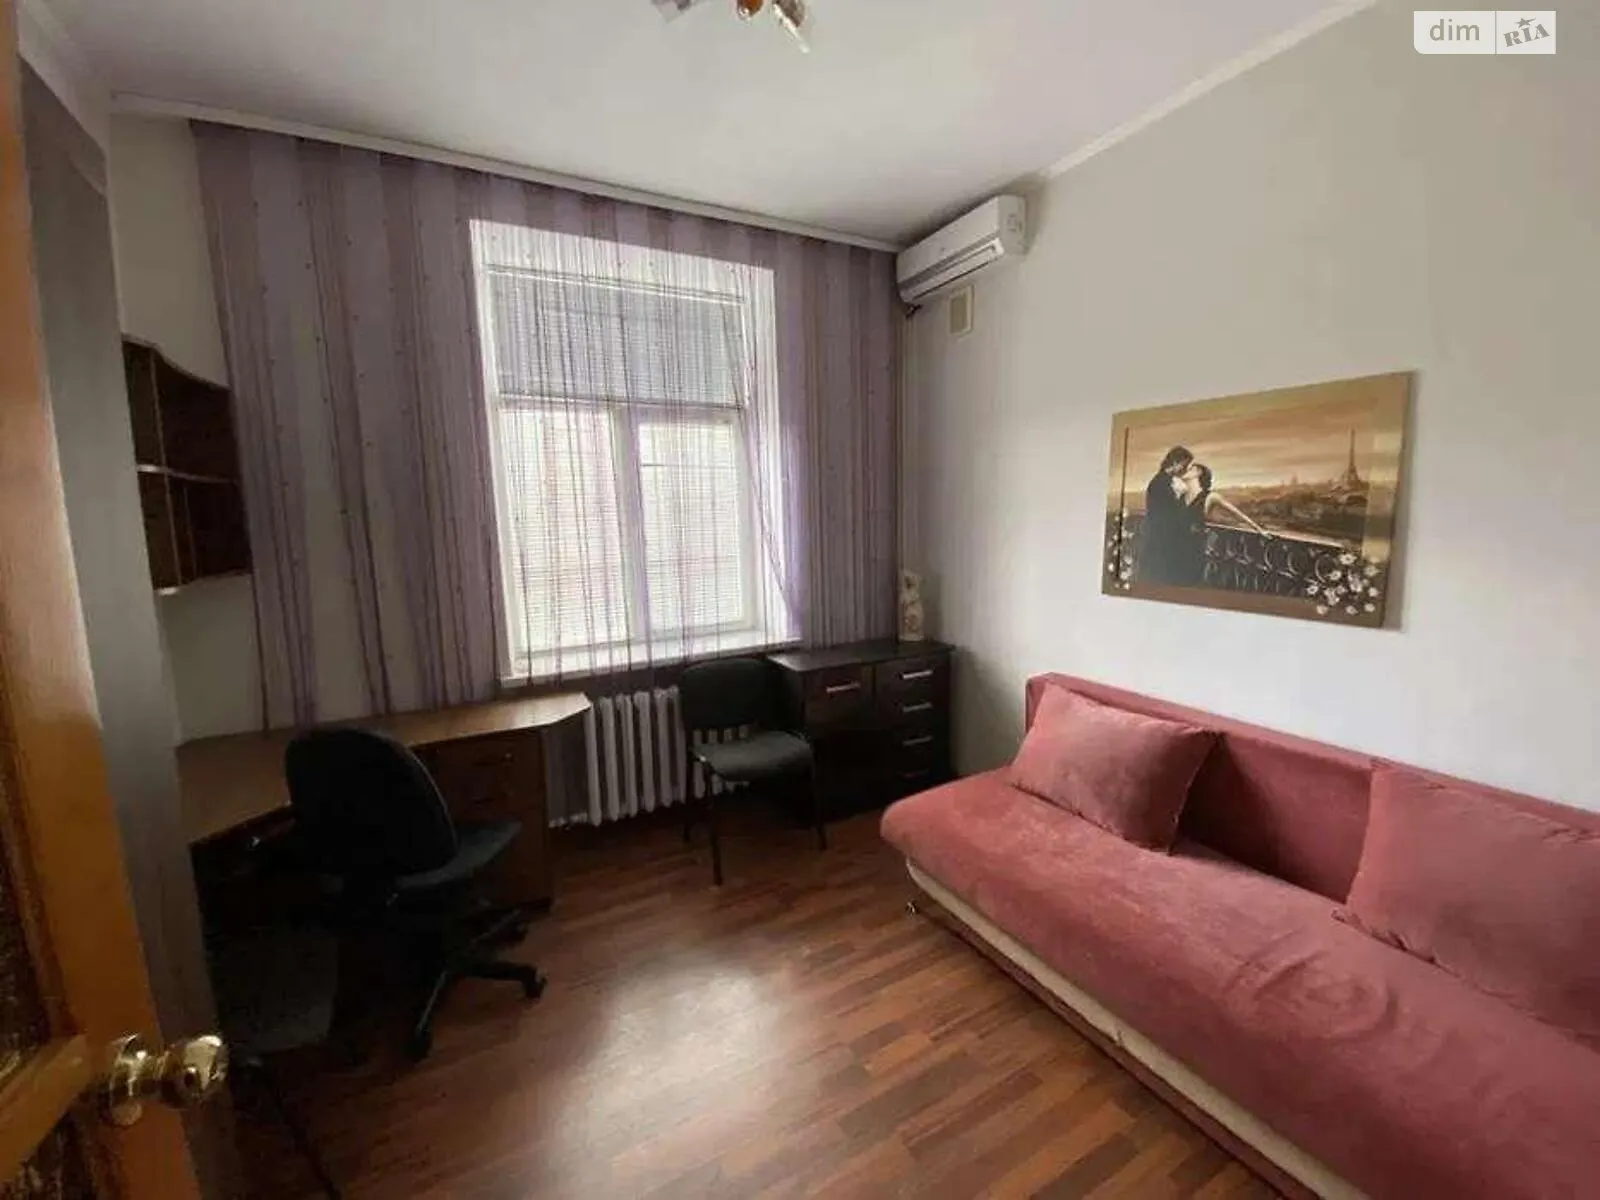 Продается комната 20 кв. м в Харькове - фото 2